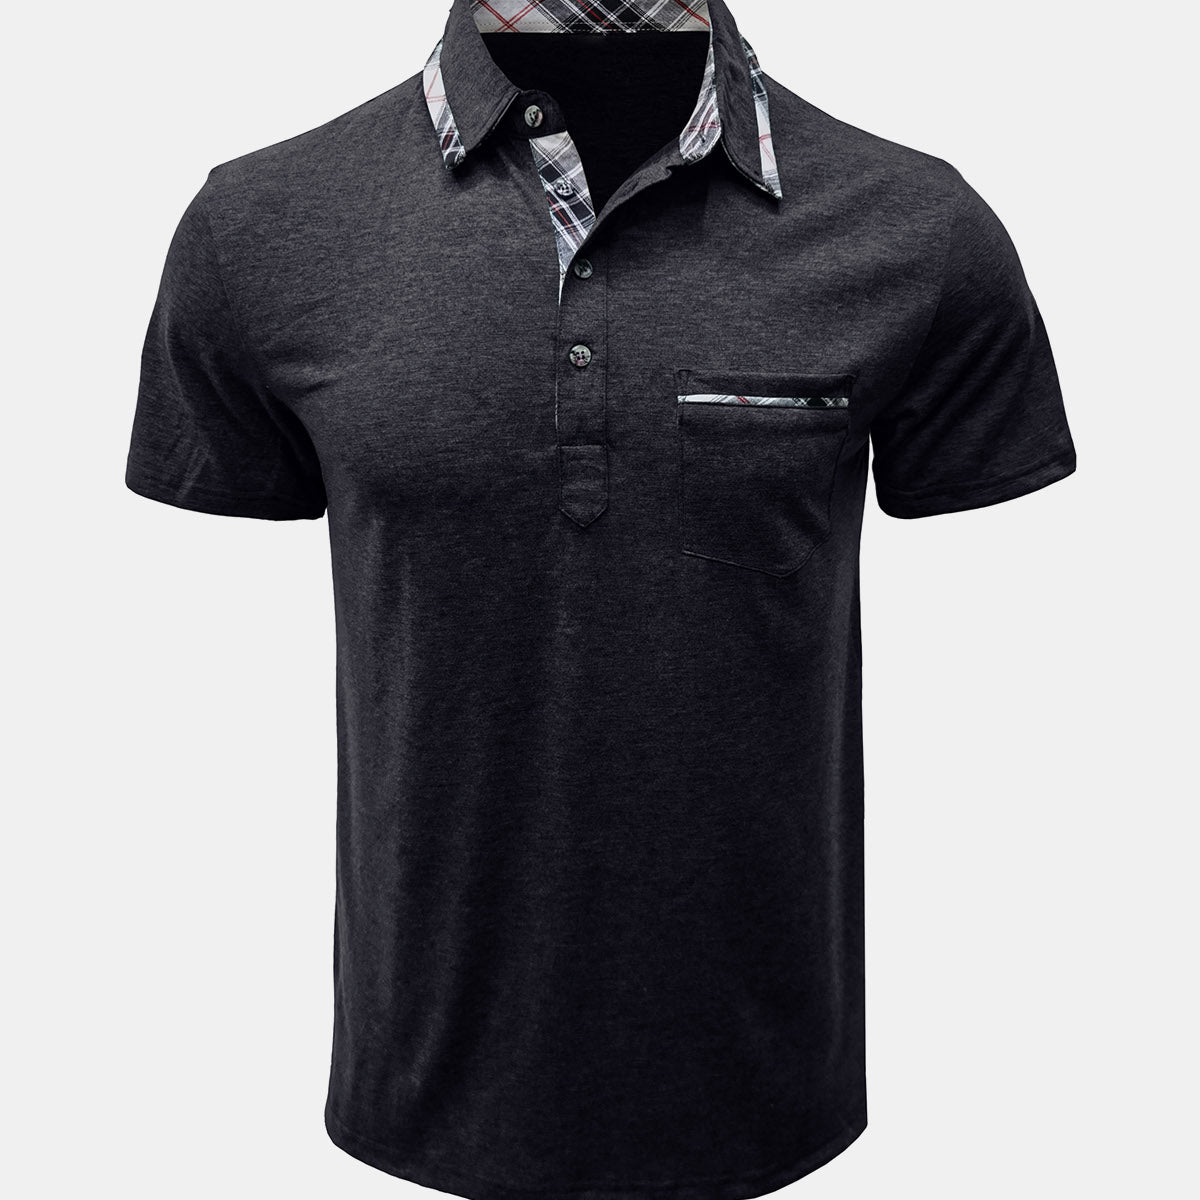 Men's Summer Casual Plaid Breathable Pocket Short Sleeve Polo Shirt